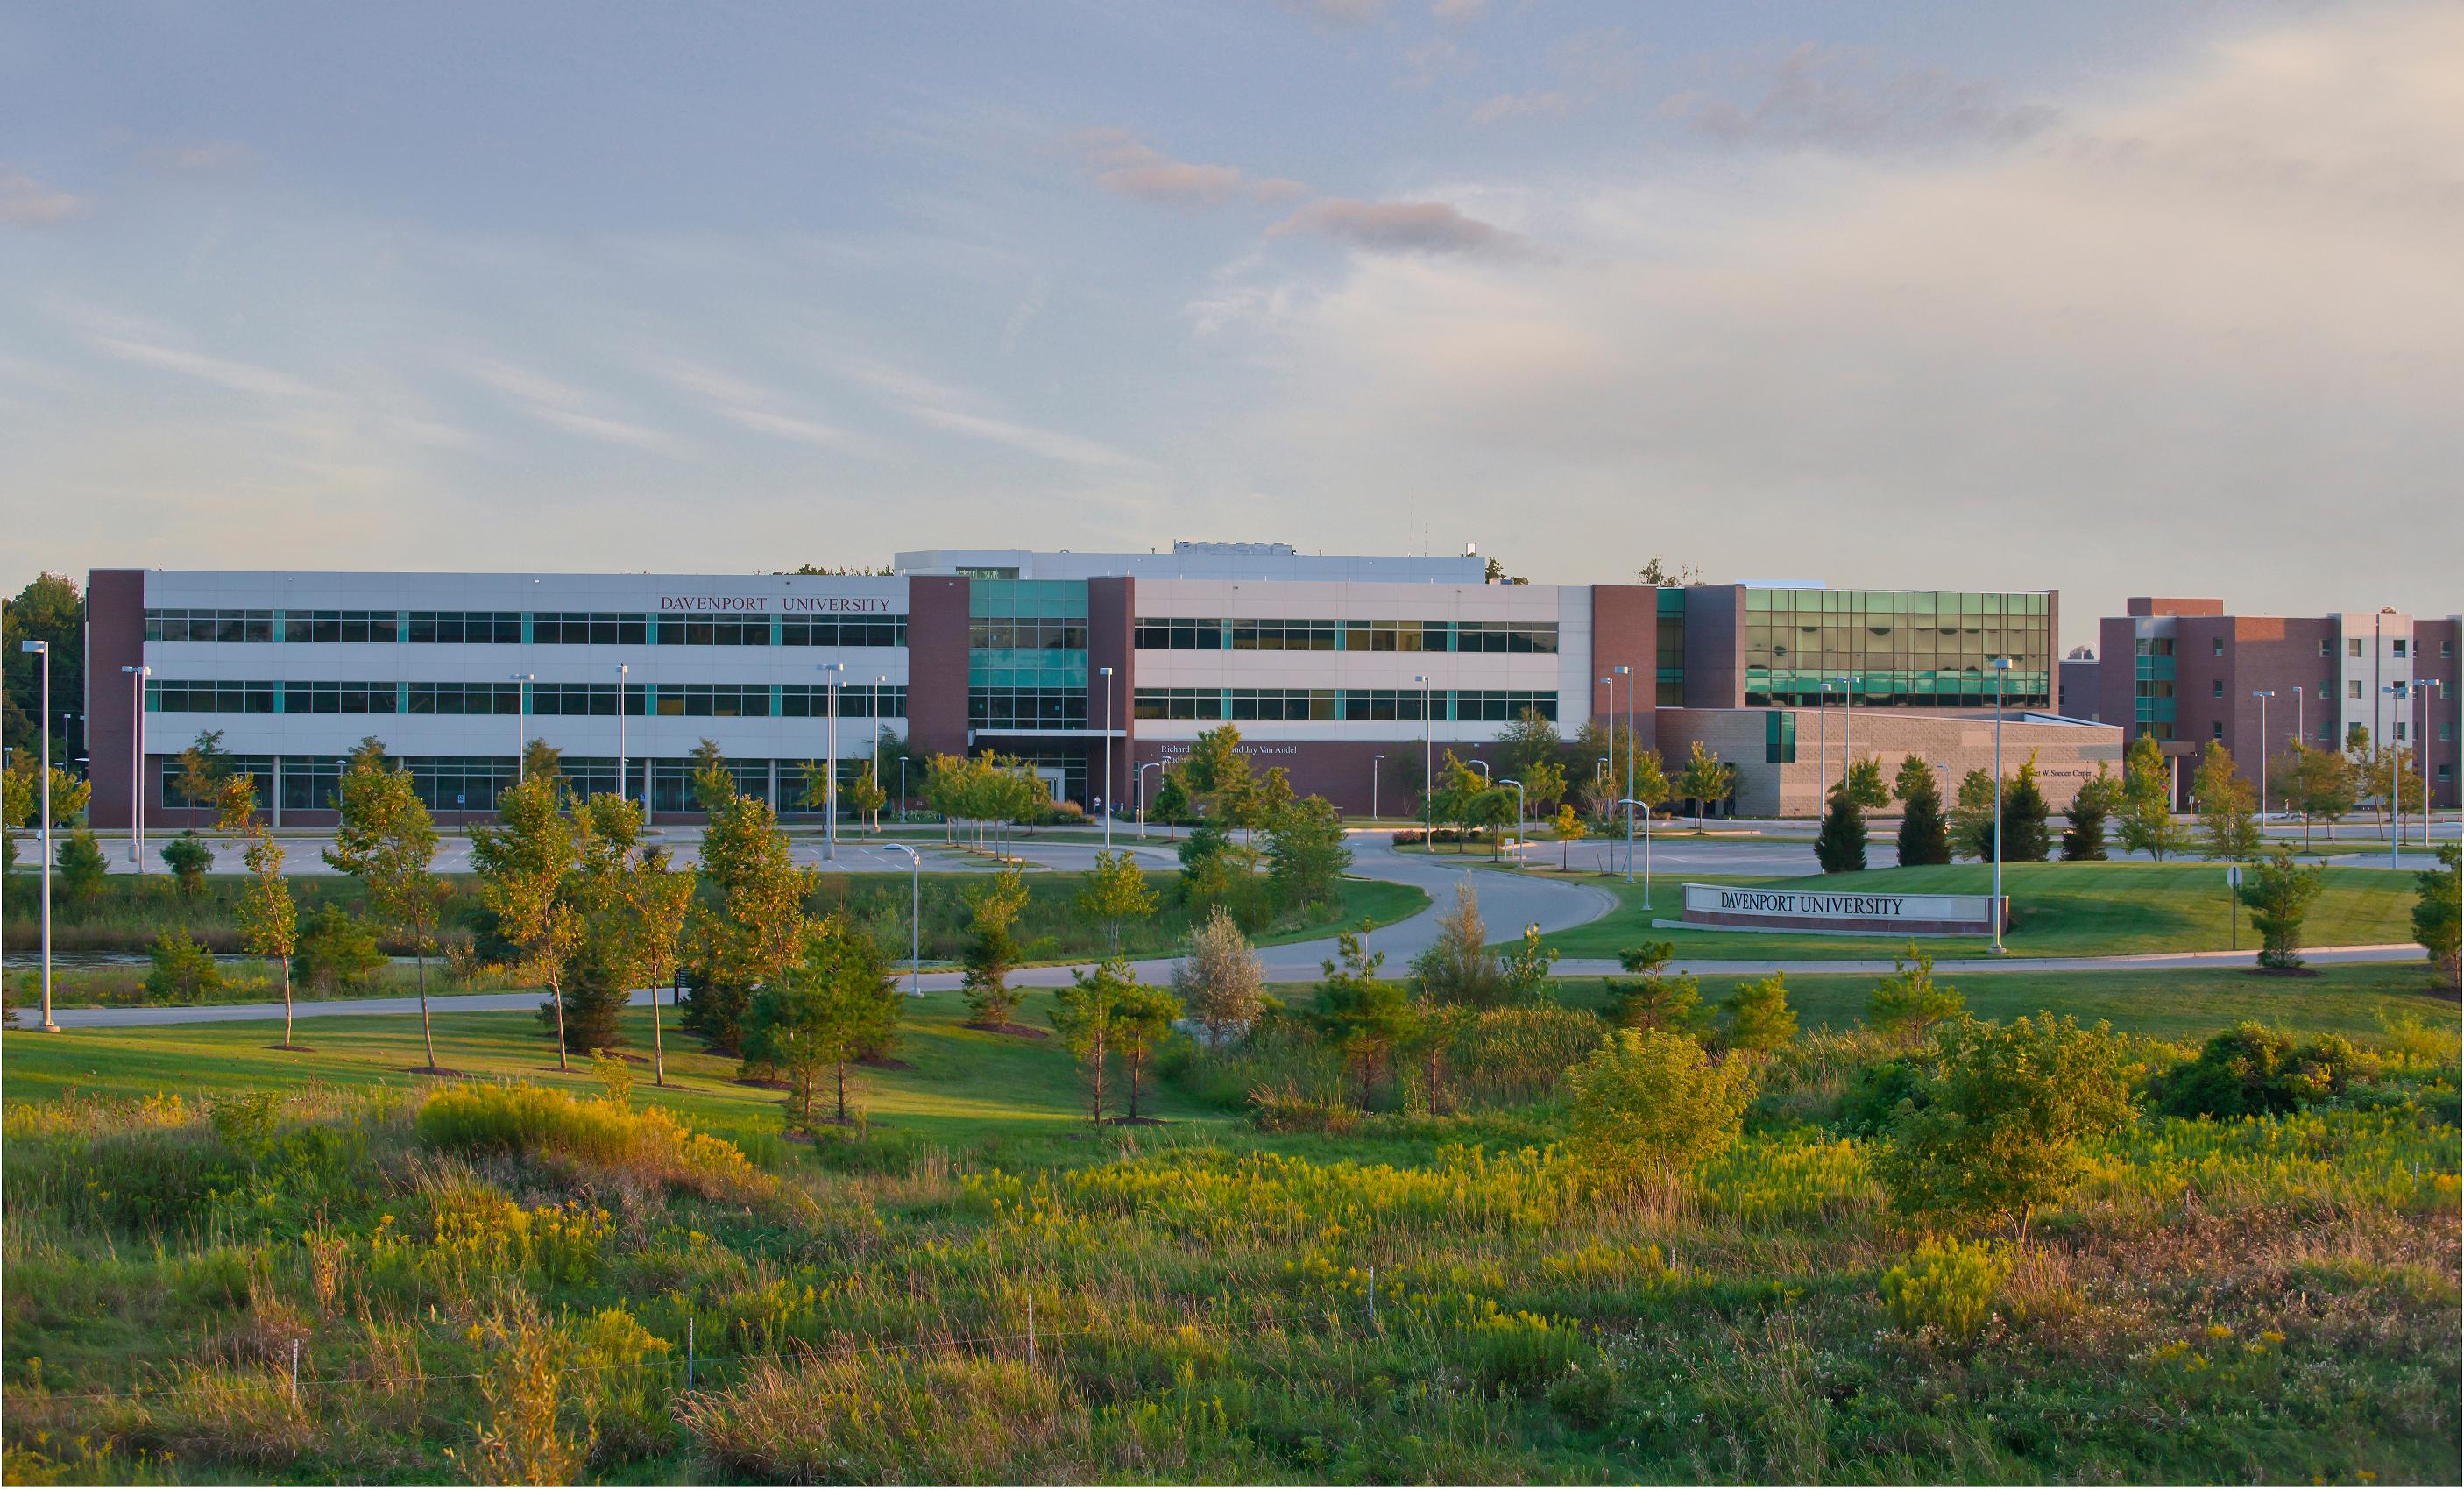 Davenport University's W.A. Lettinga Campus in Grand Rapids